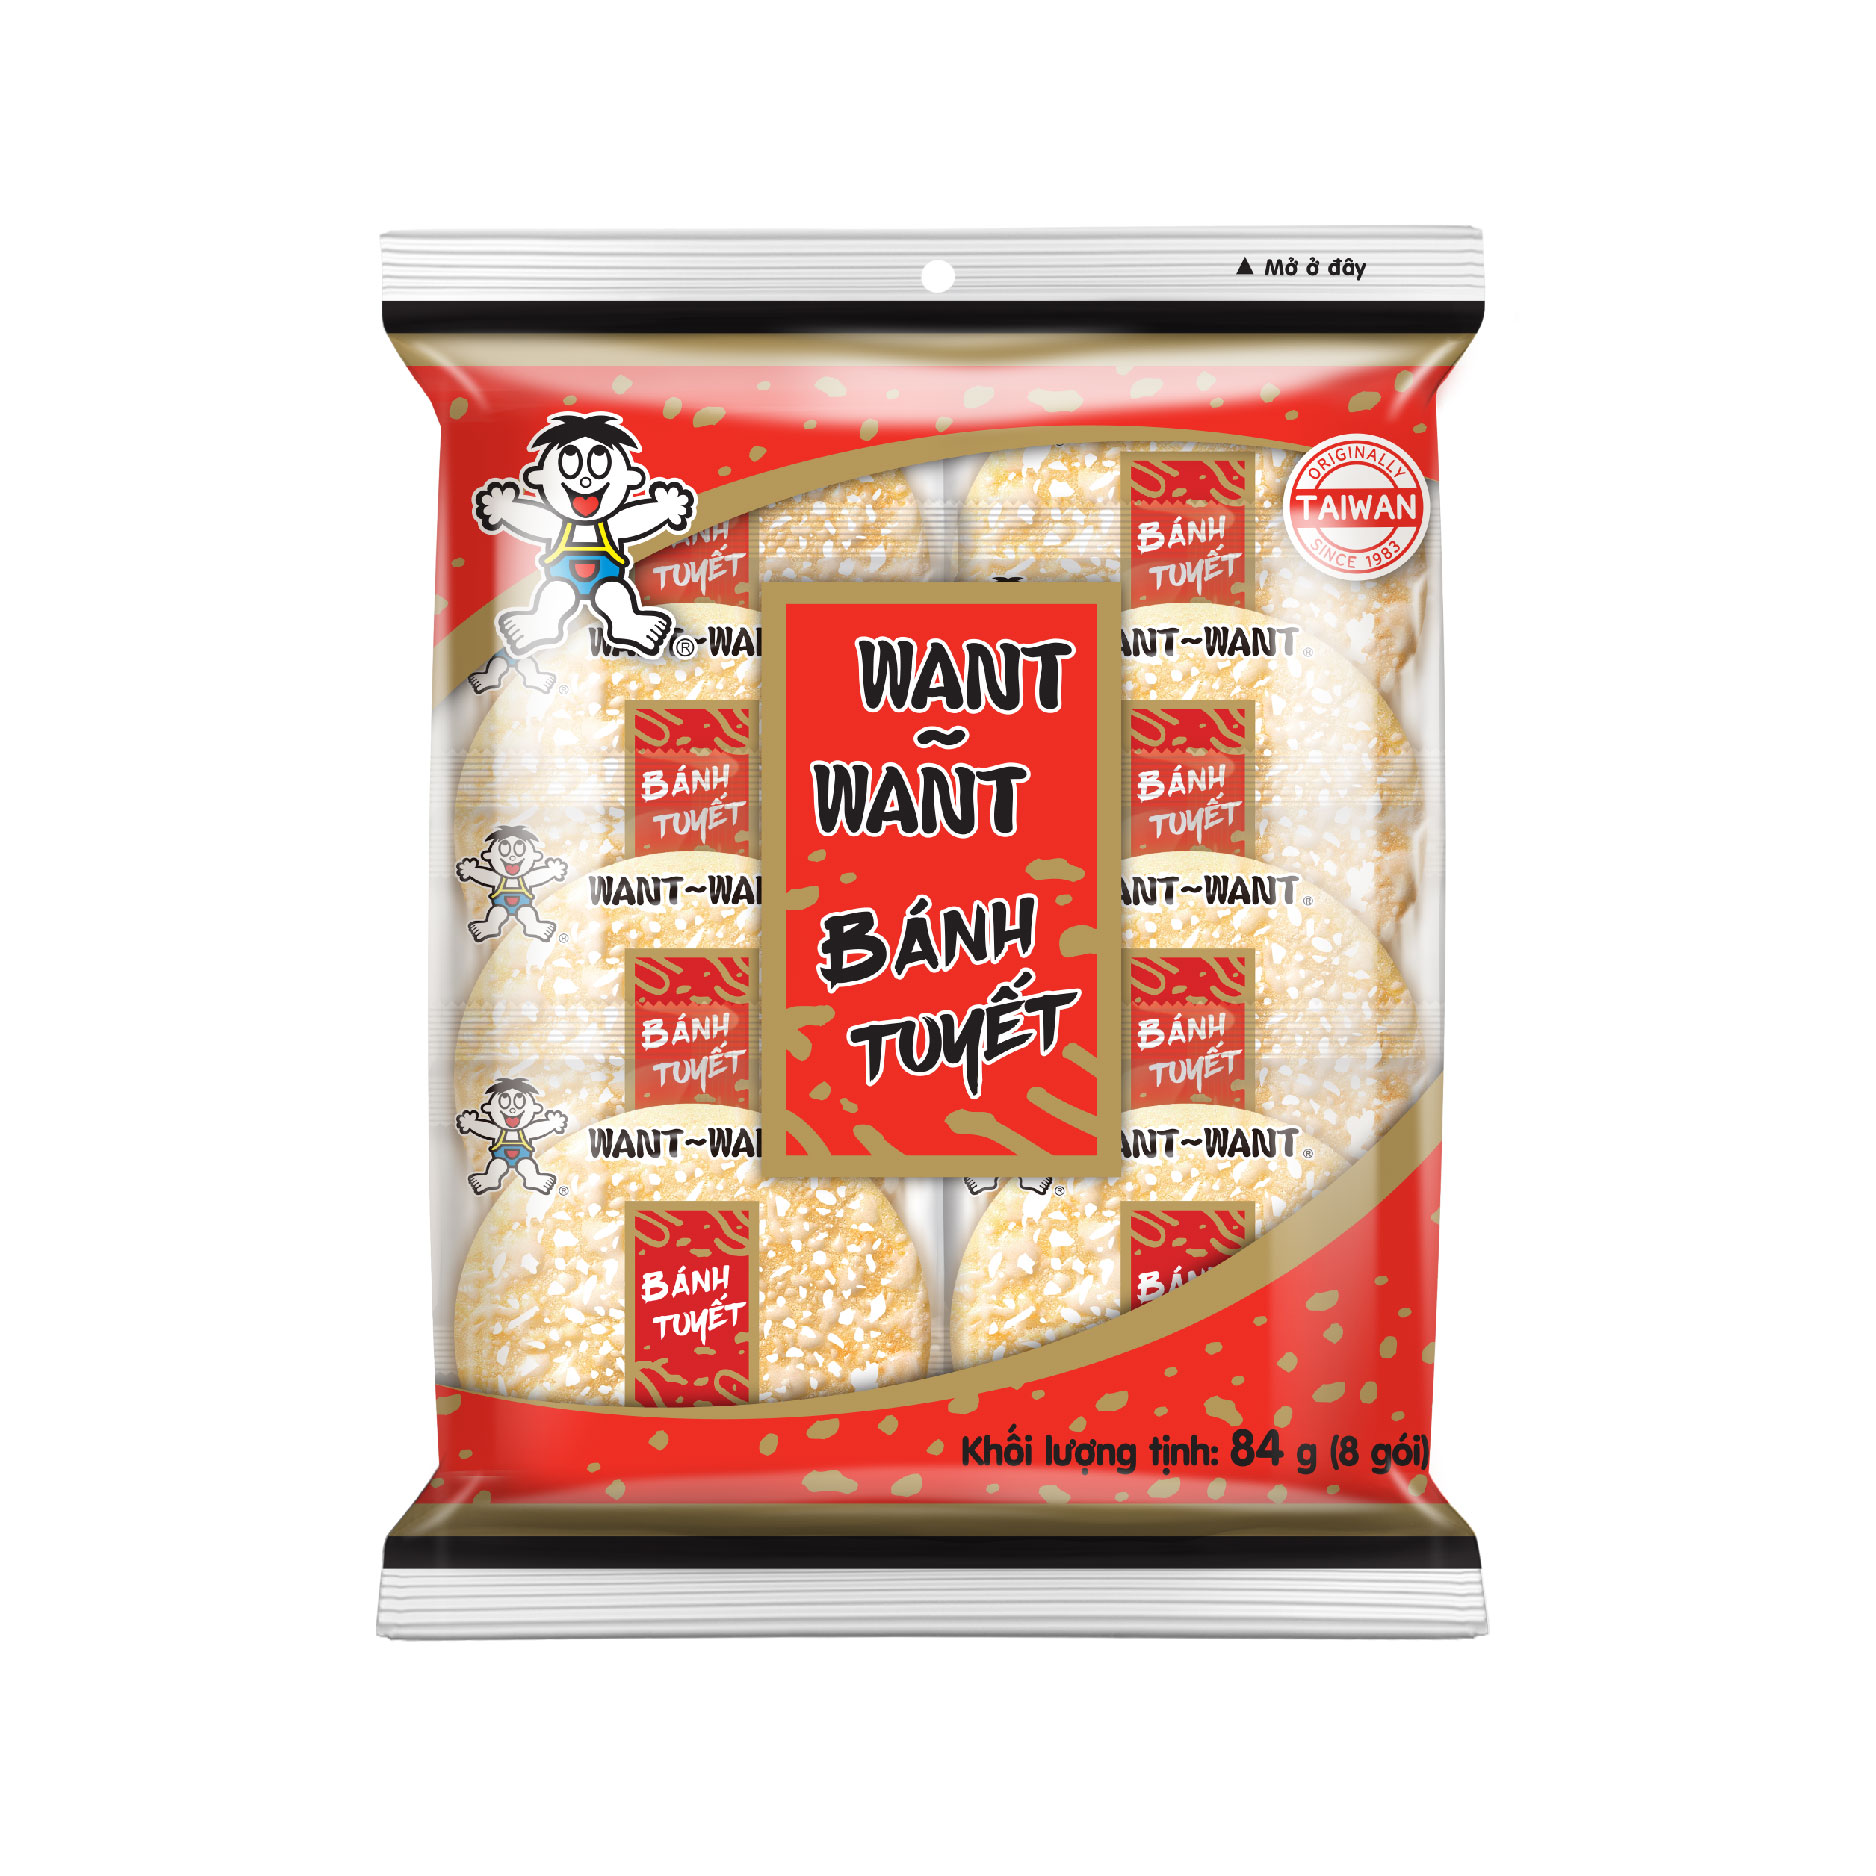 WANT WANT Big Rice Cracker 135g